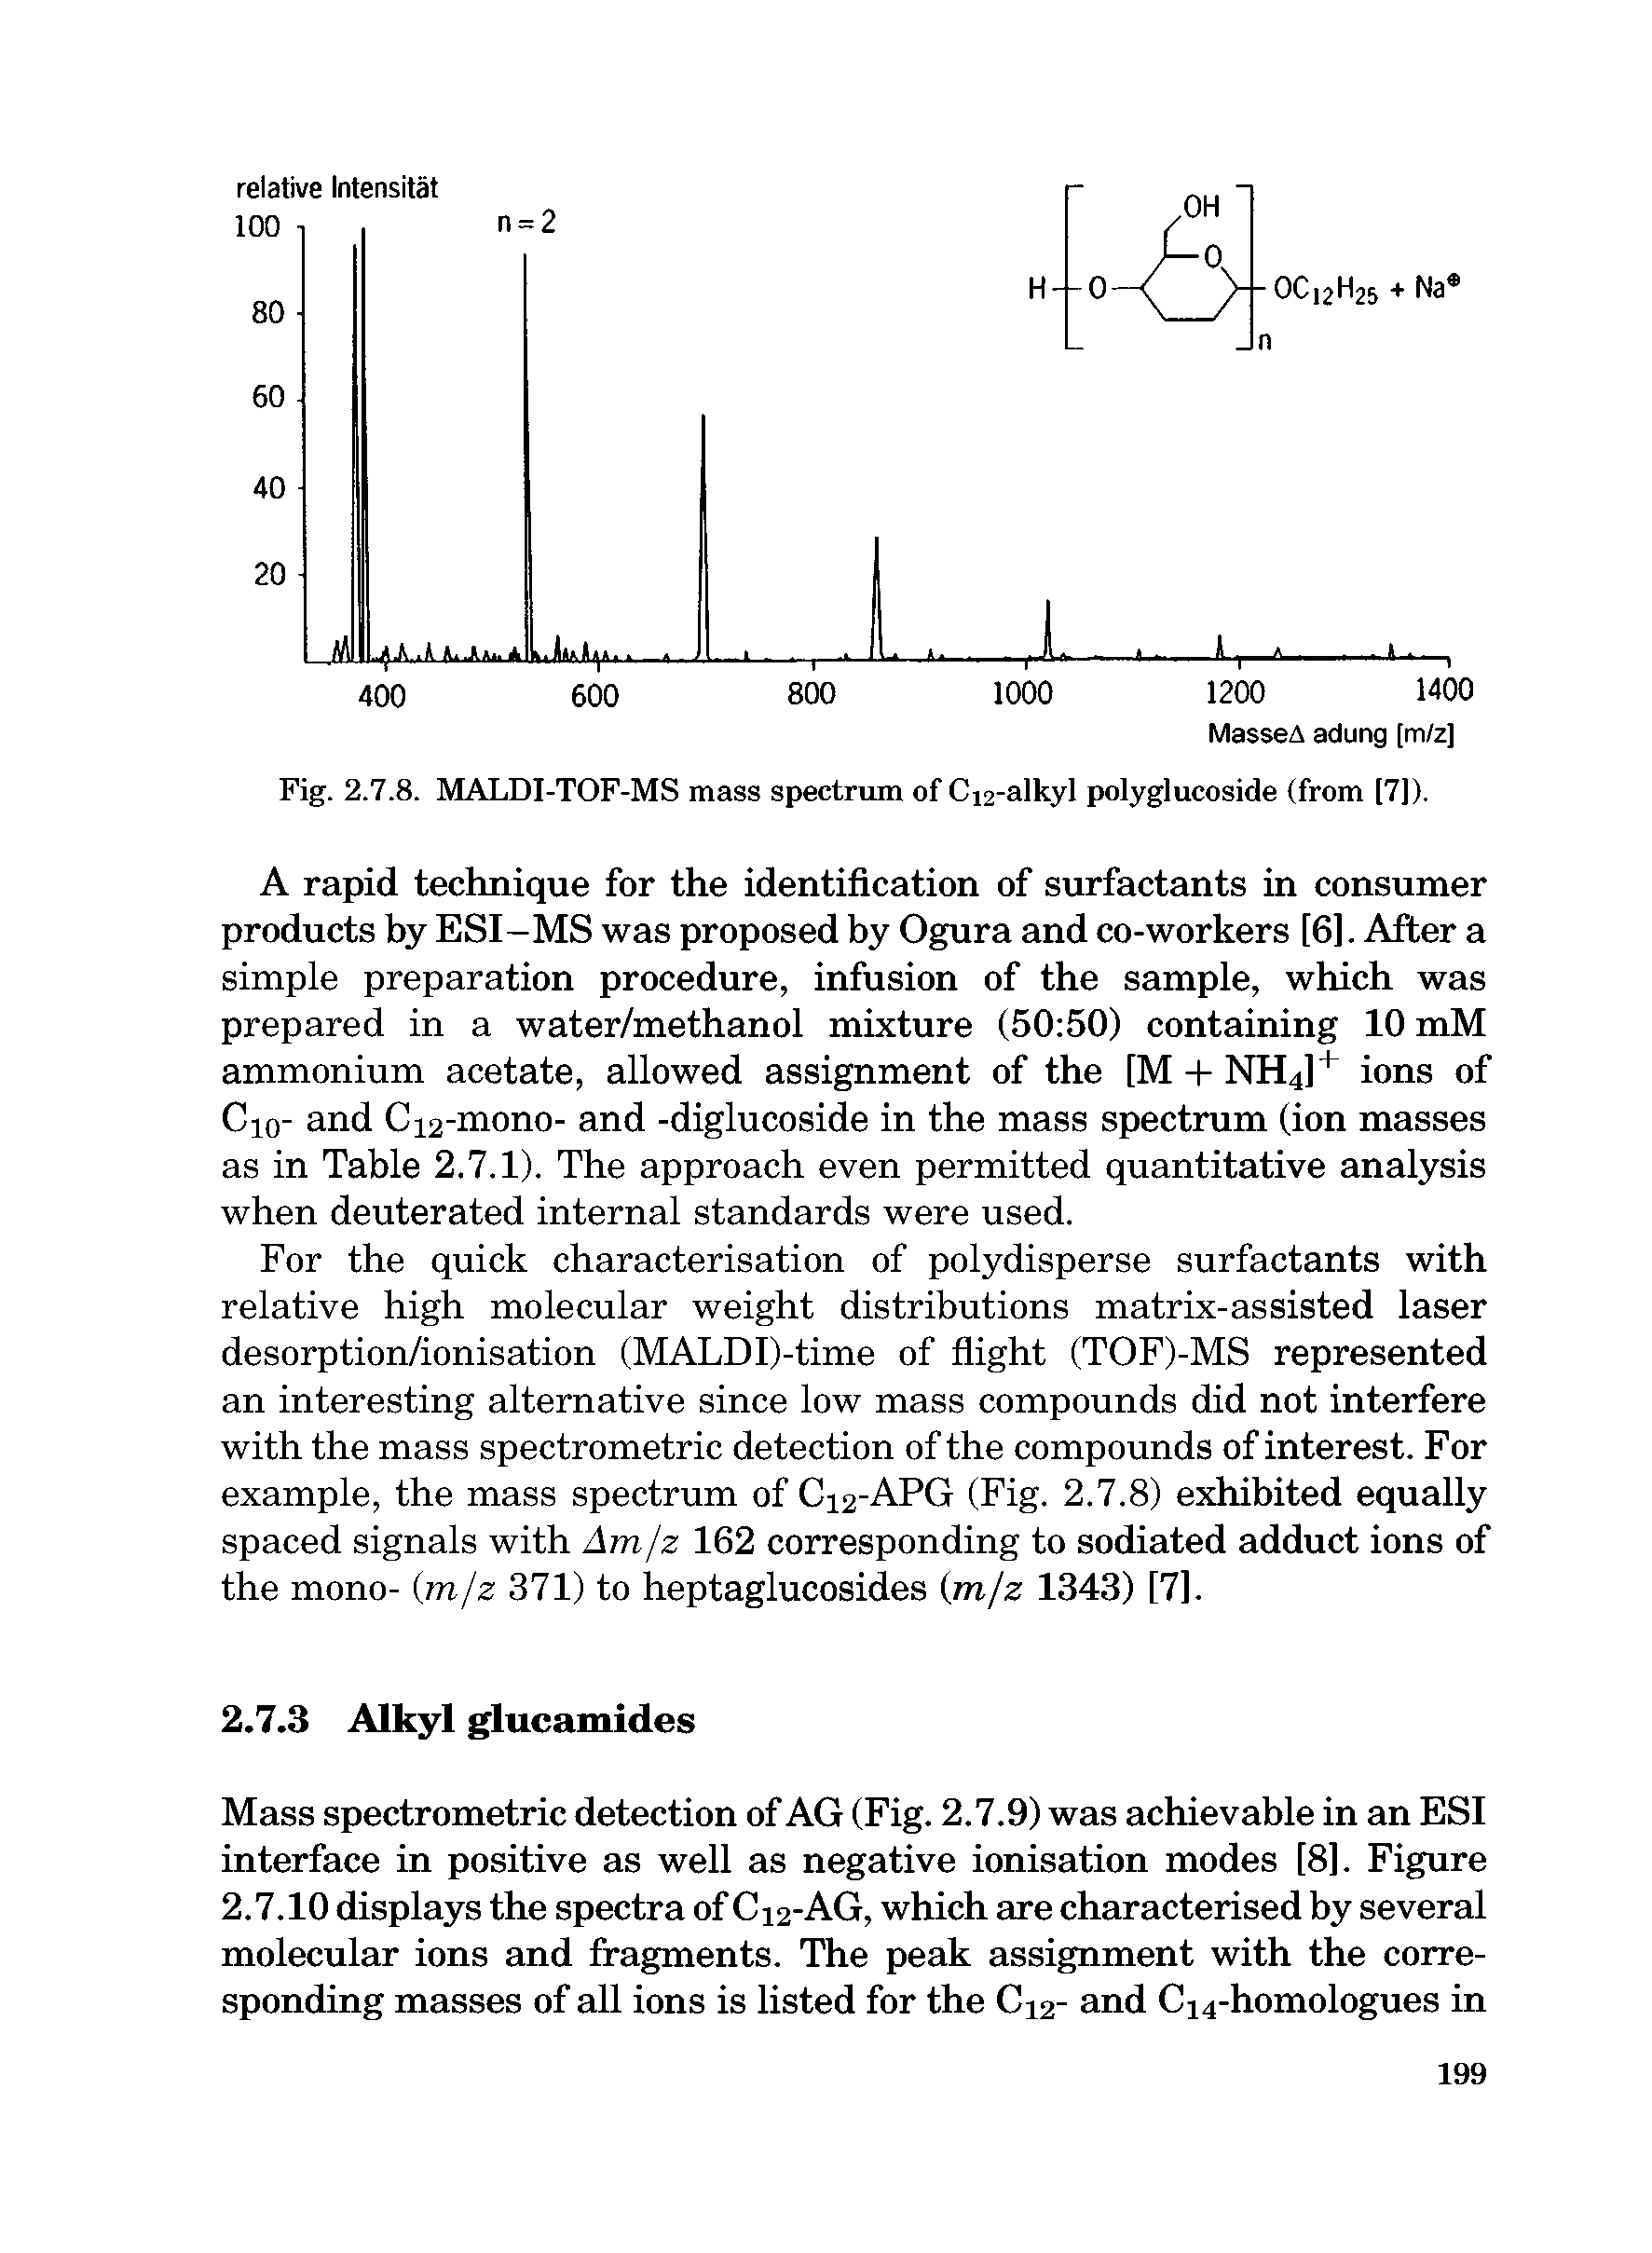 Fig. 2.7.8. MALDI-TOF-MS mass spectrum of Ci2-alkyl polyglucoside (from [7]).